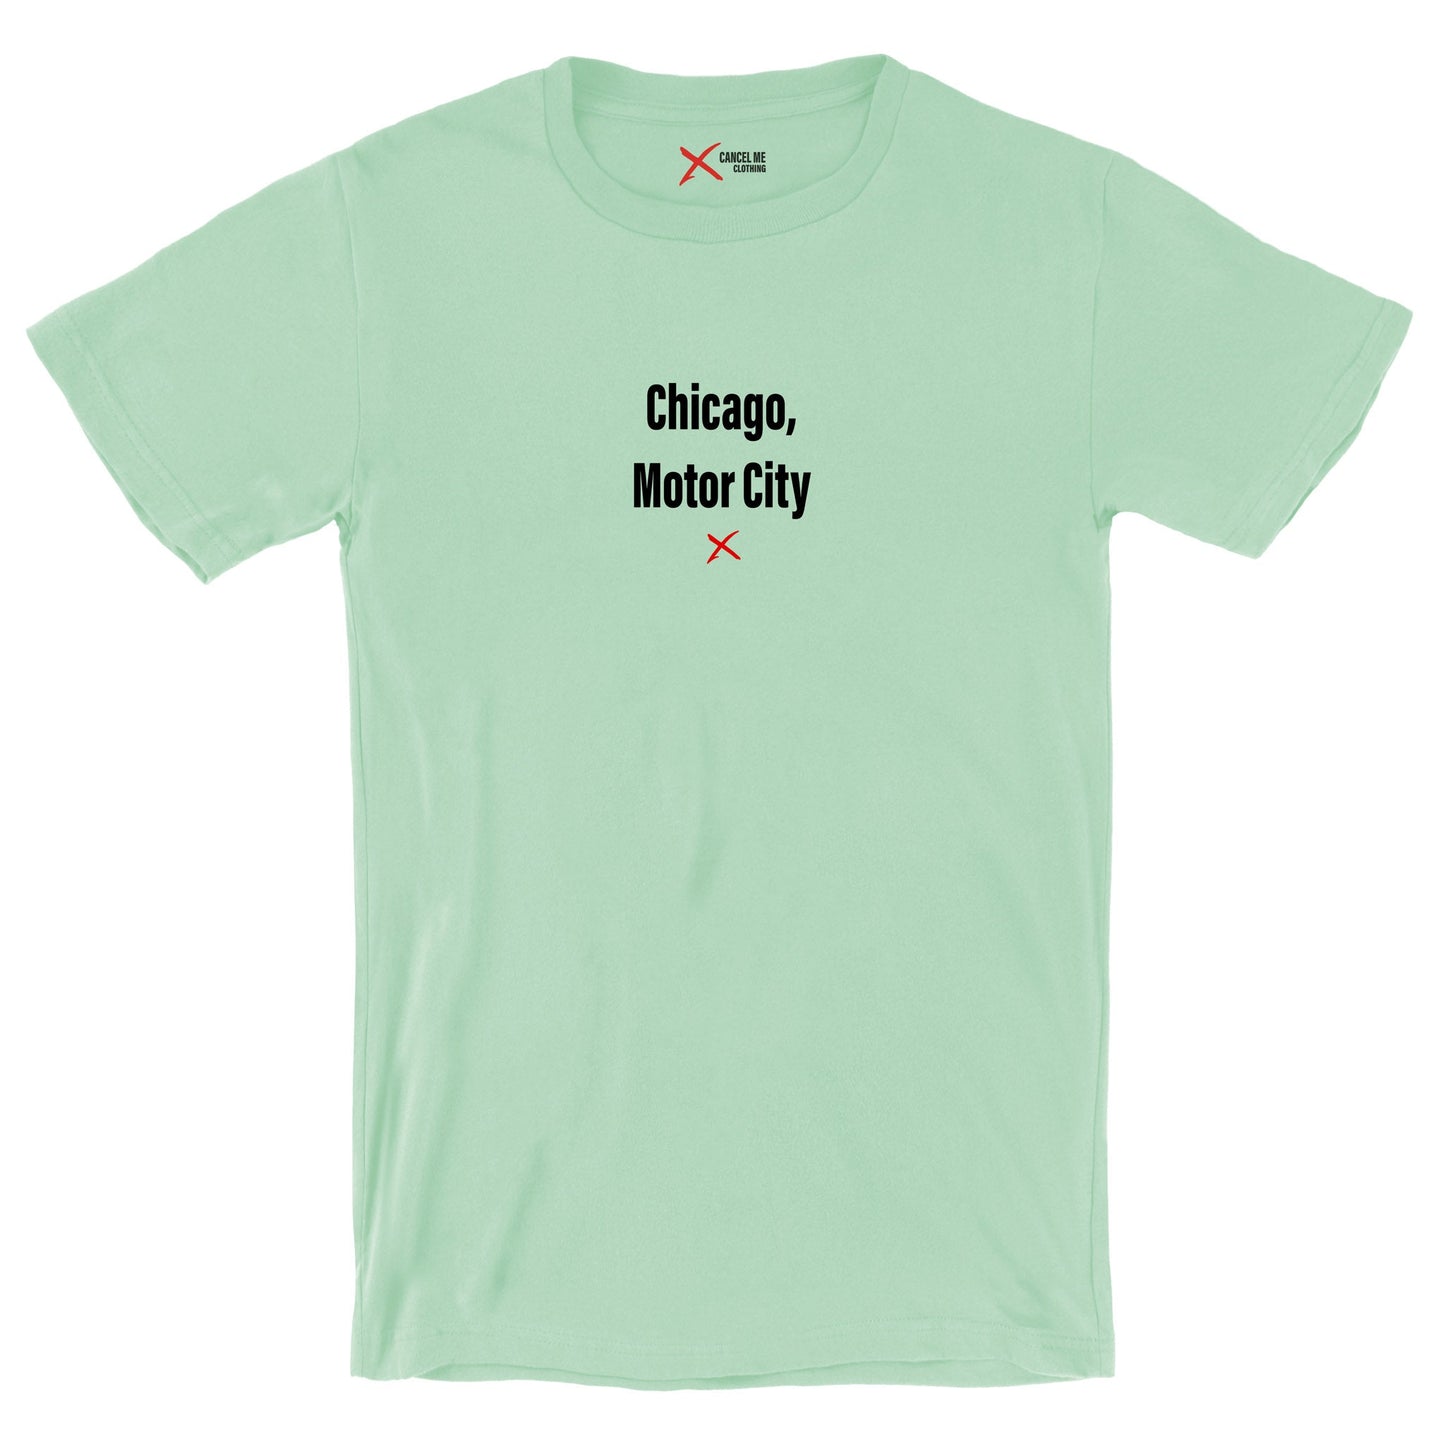 Chicago, Motor City - Shirt